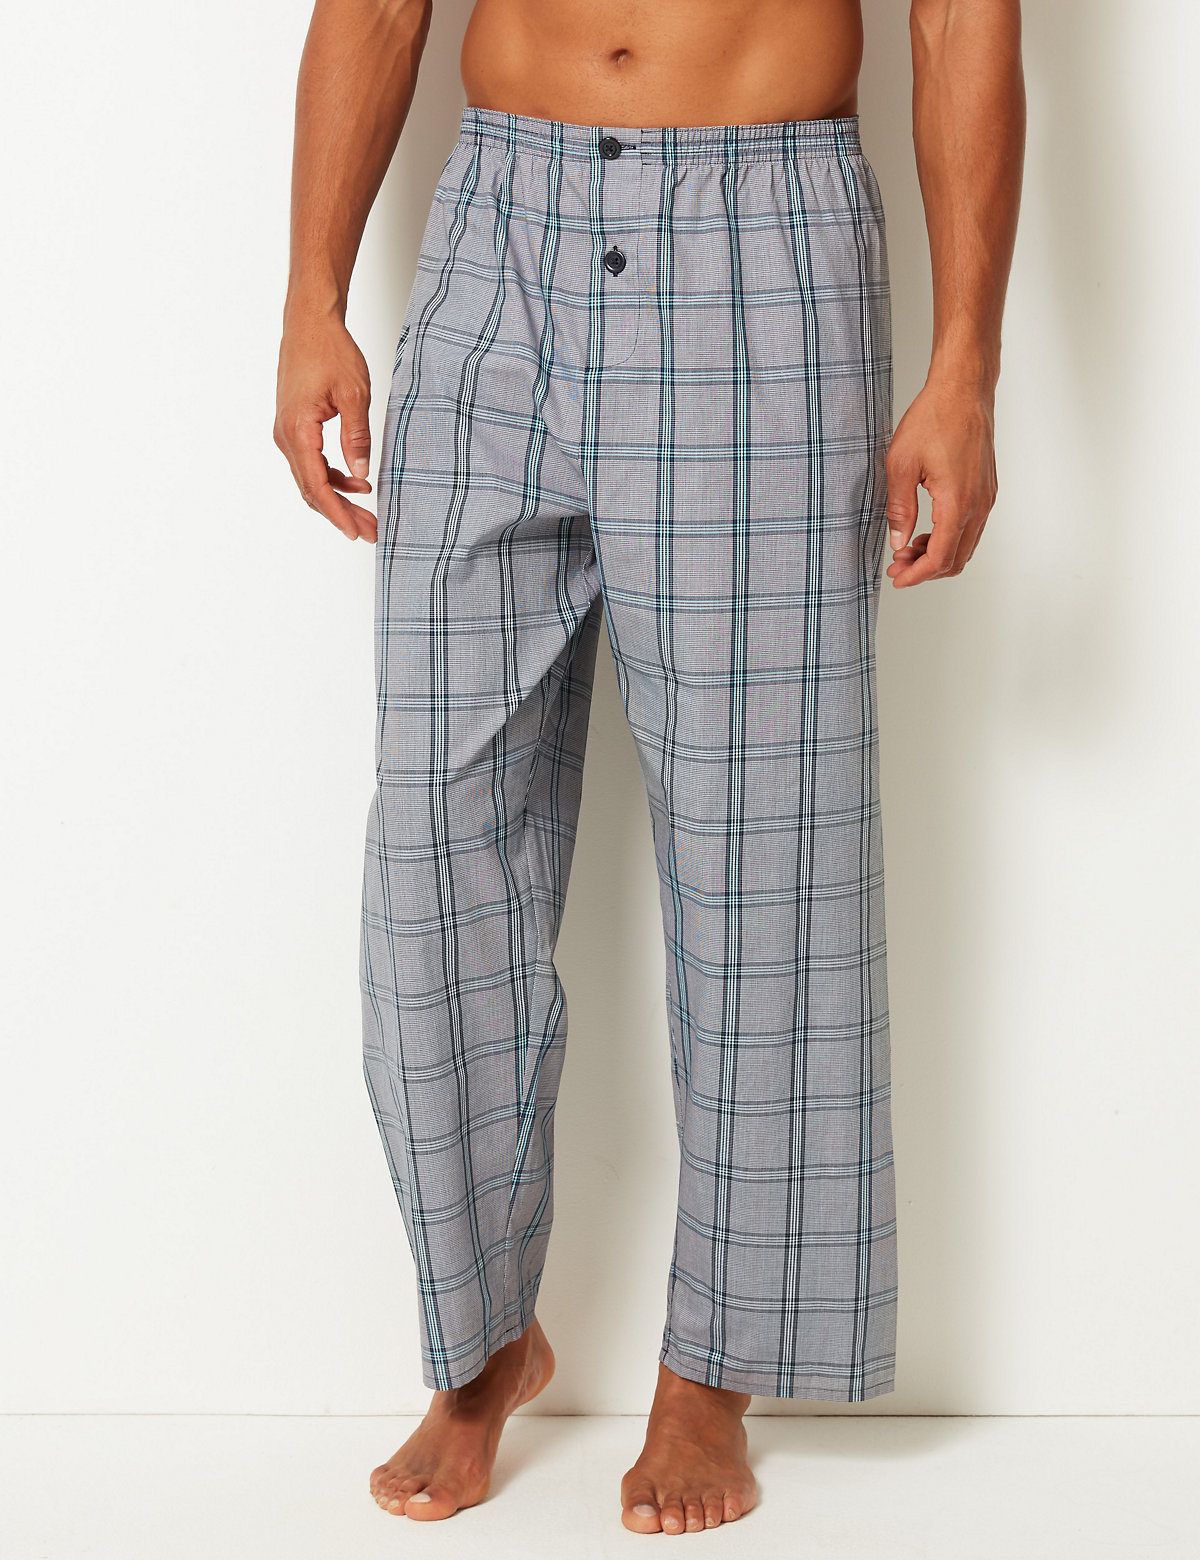 Cotton Blend Checked Pyjama Set